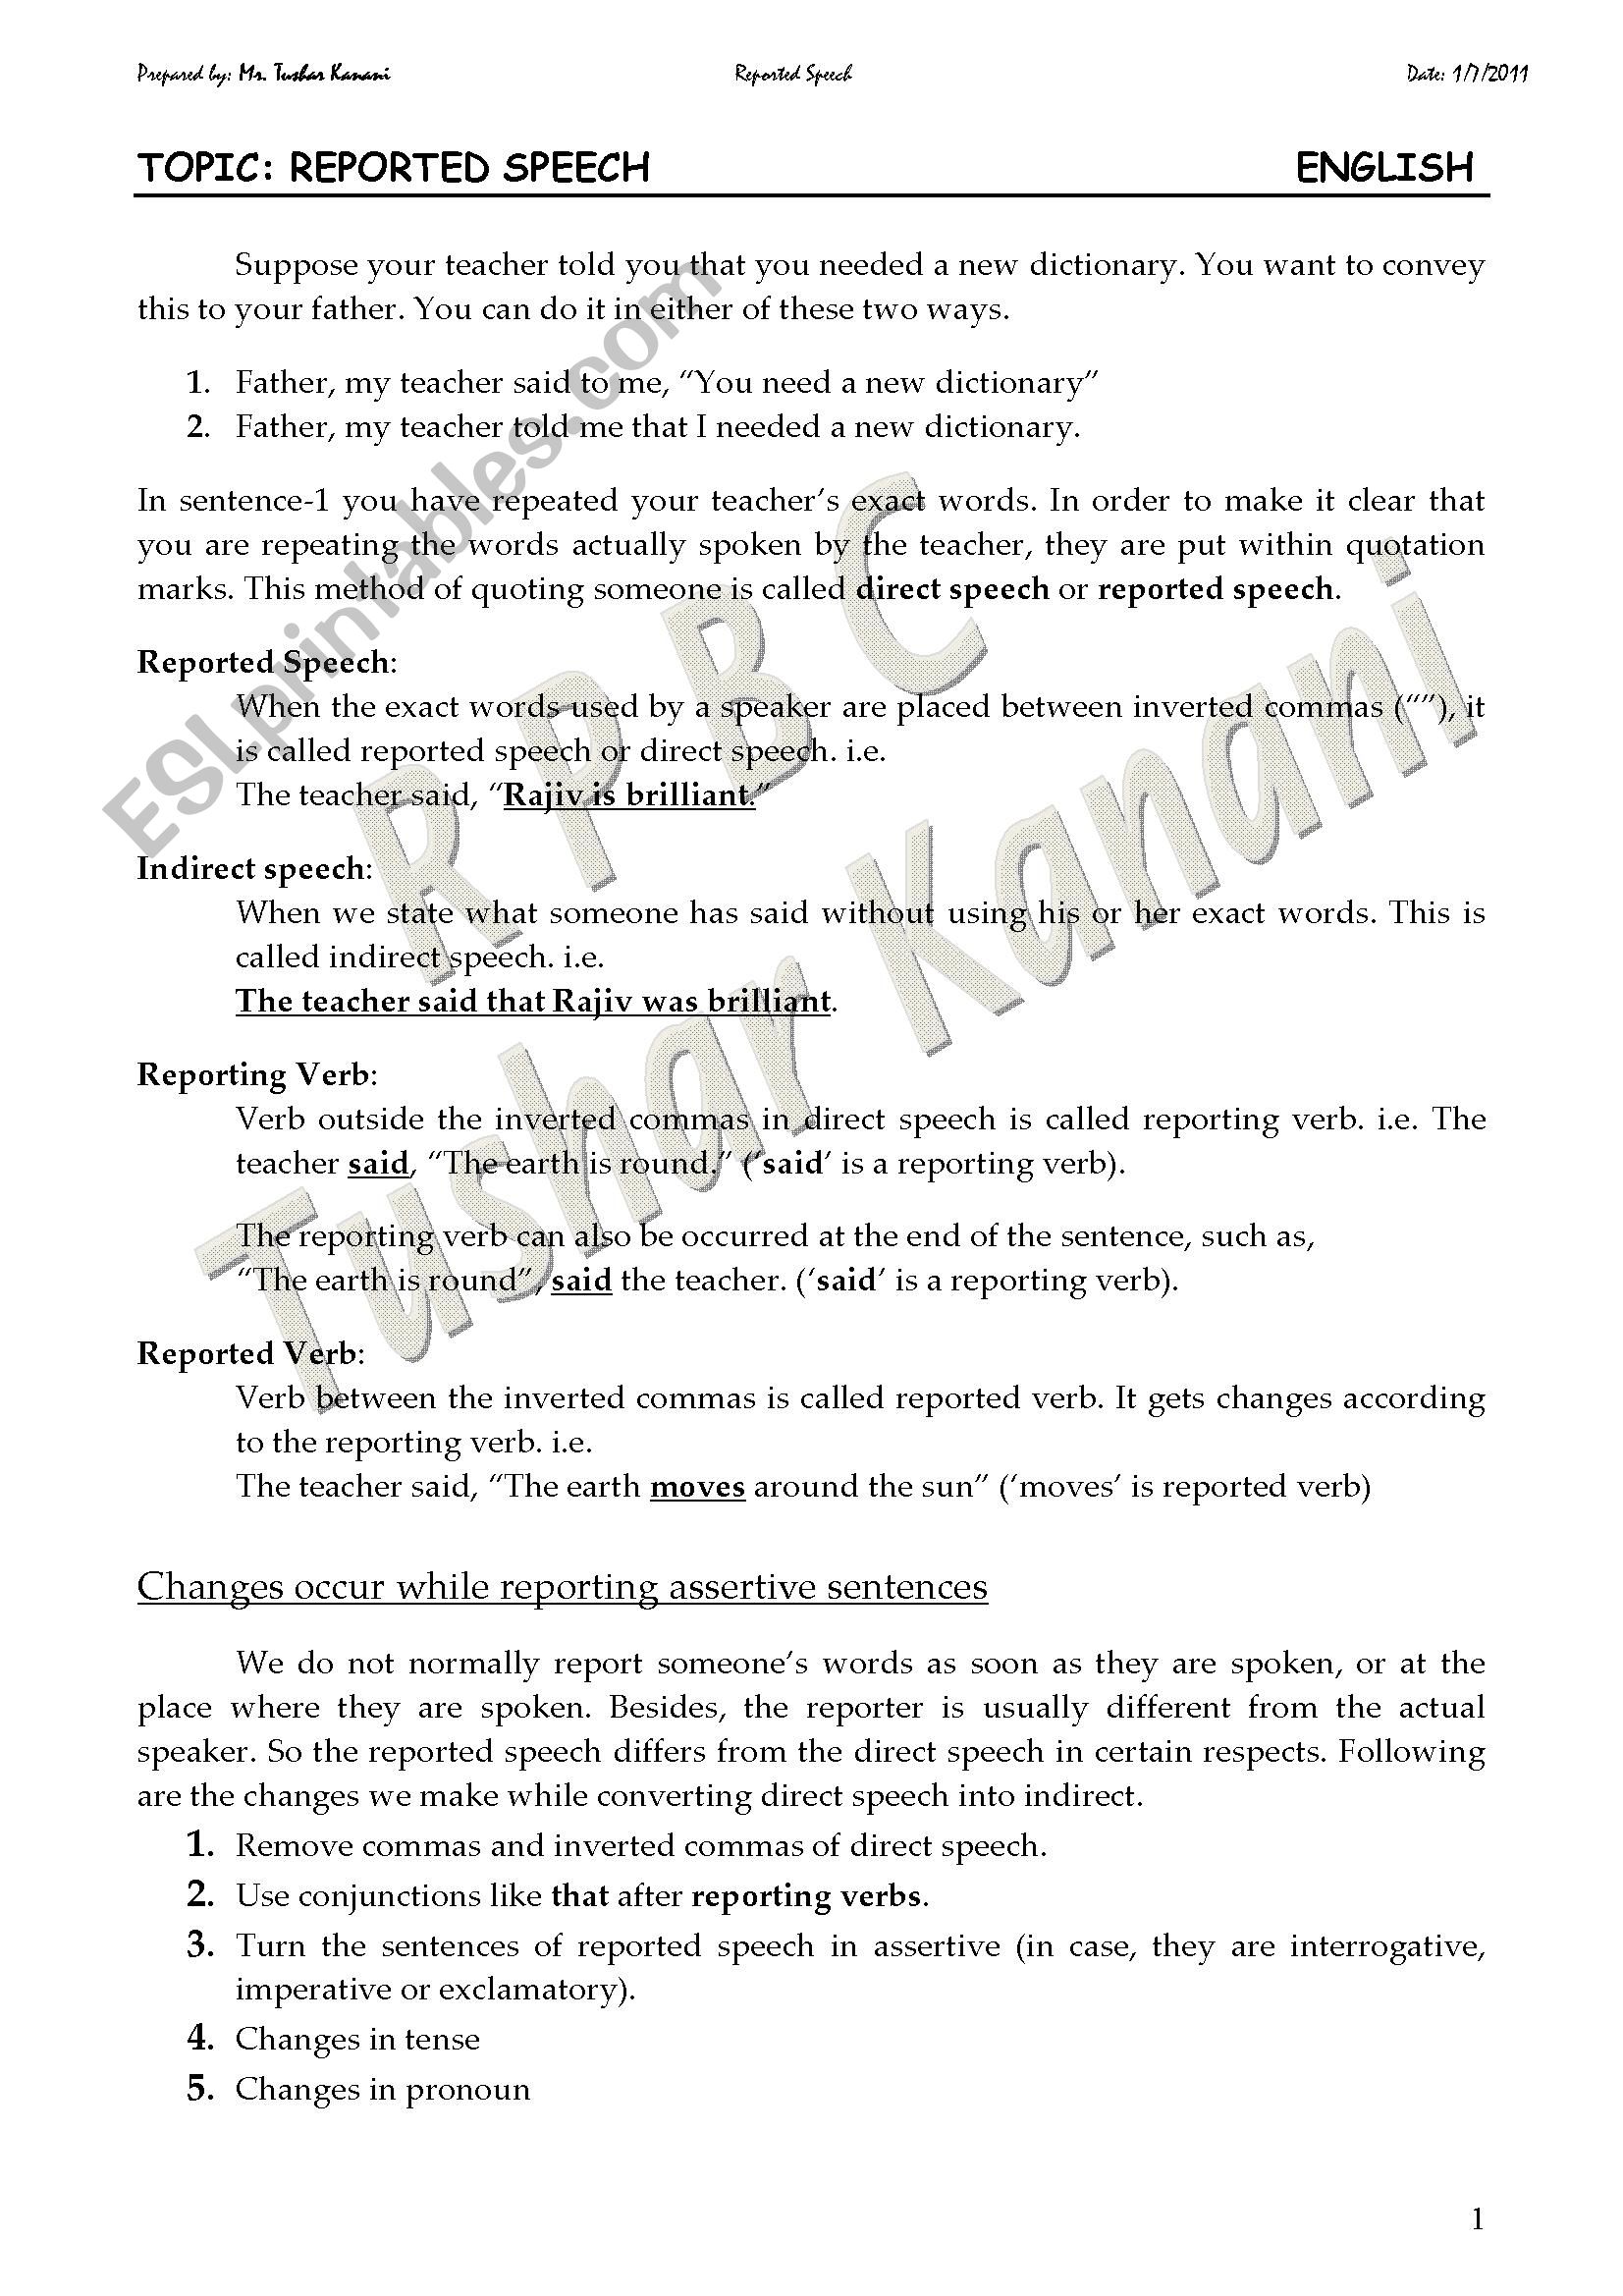 Reported Speech Worksheet (5 pg explanation + 6 pg exercises)